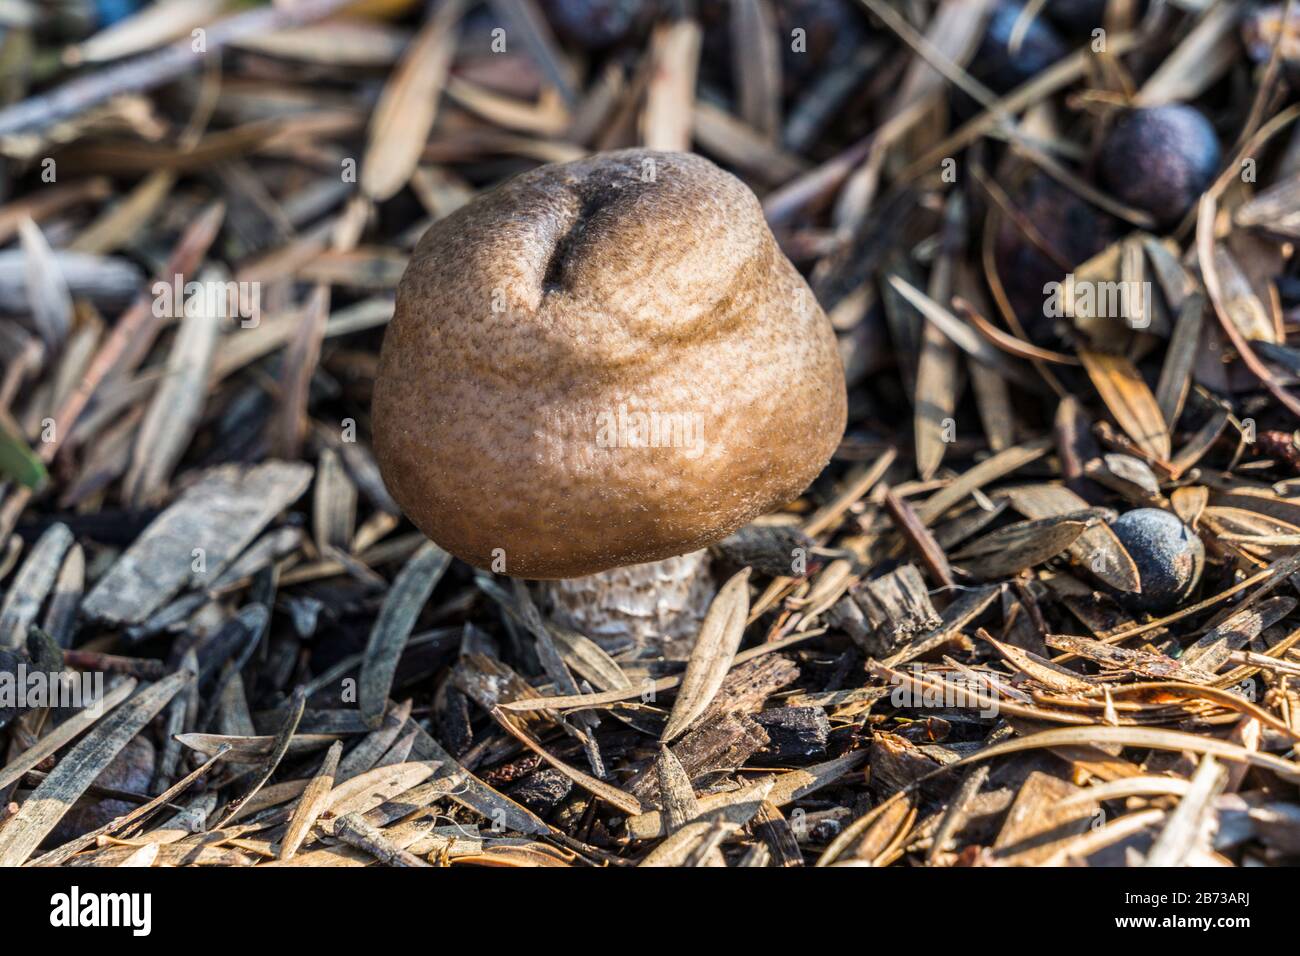 wild mushroom after rain Stock Photo